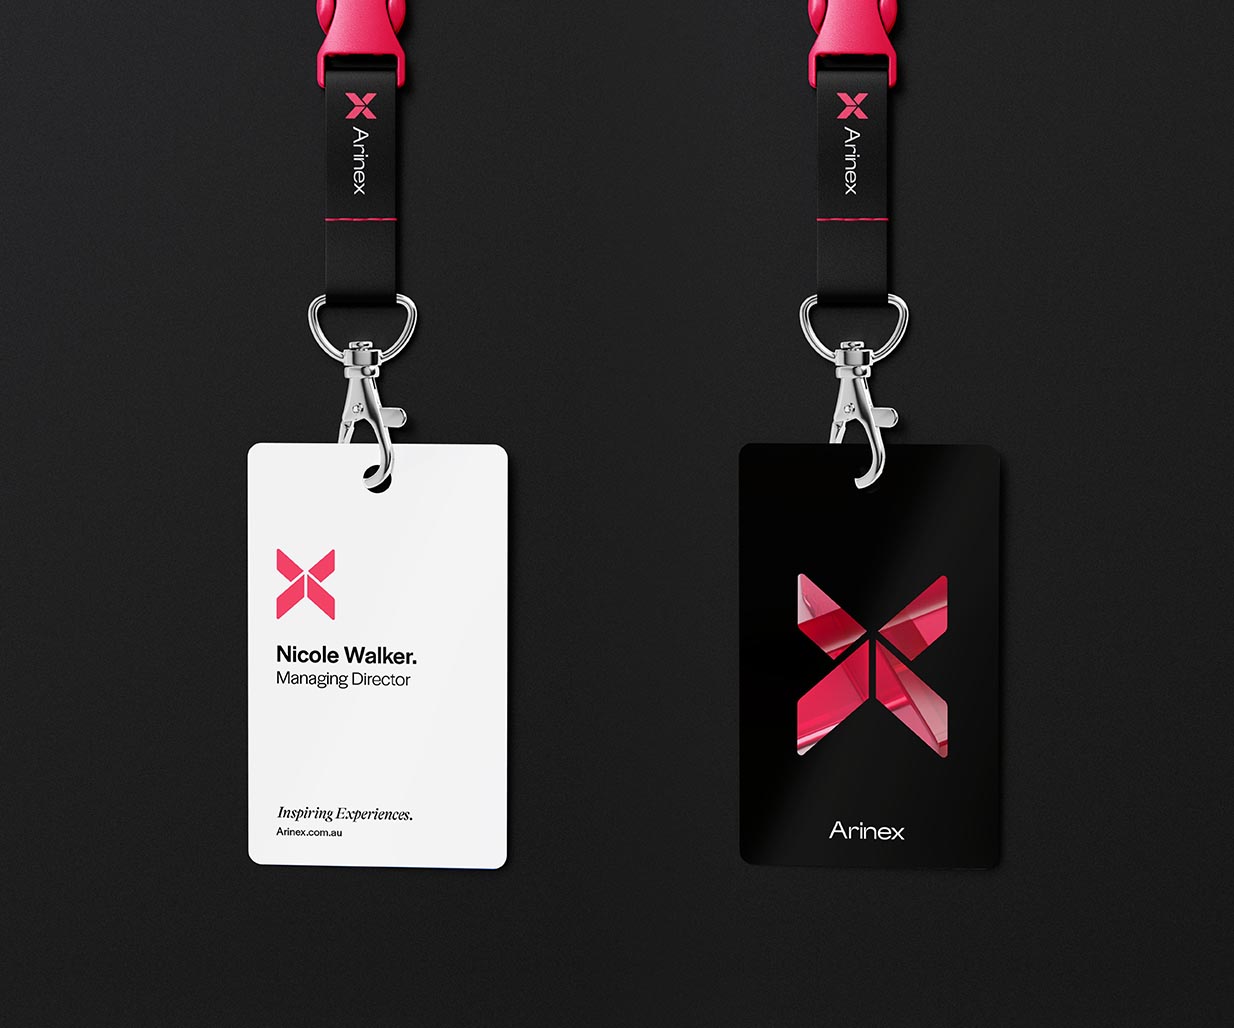 Brand positioning, strategic branding and identity design for events company in Sydney, Australia, by strategic branding agency, Percept, Image J